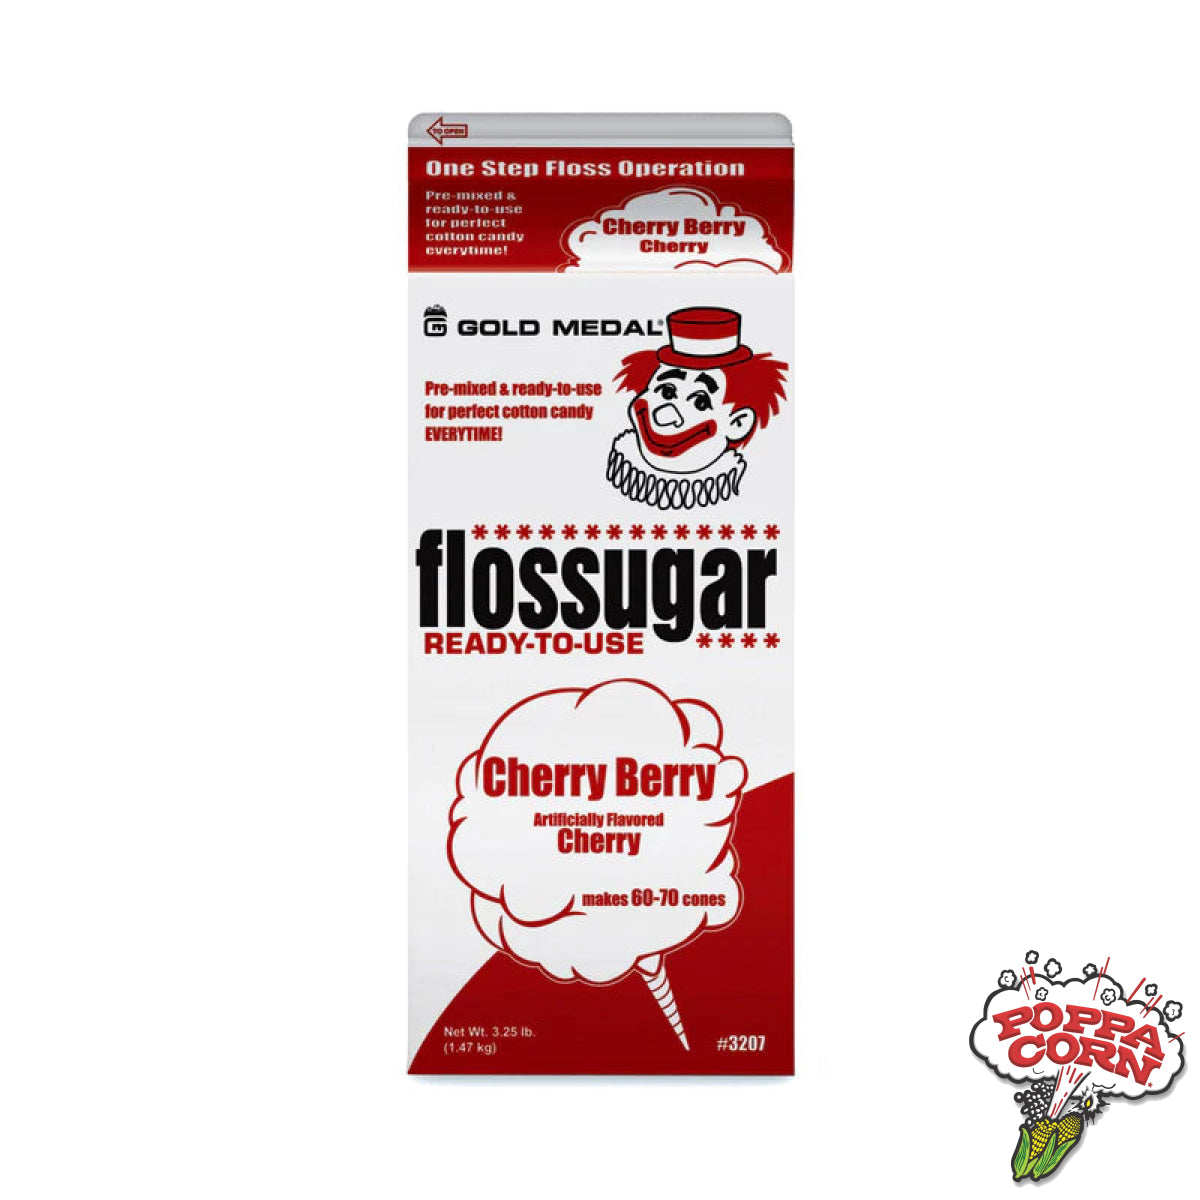 Cherry Berry (Cherry) - Flossugar Carton - 3.25LB Carton - FLO006 - Poppa Corn Corp